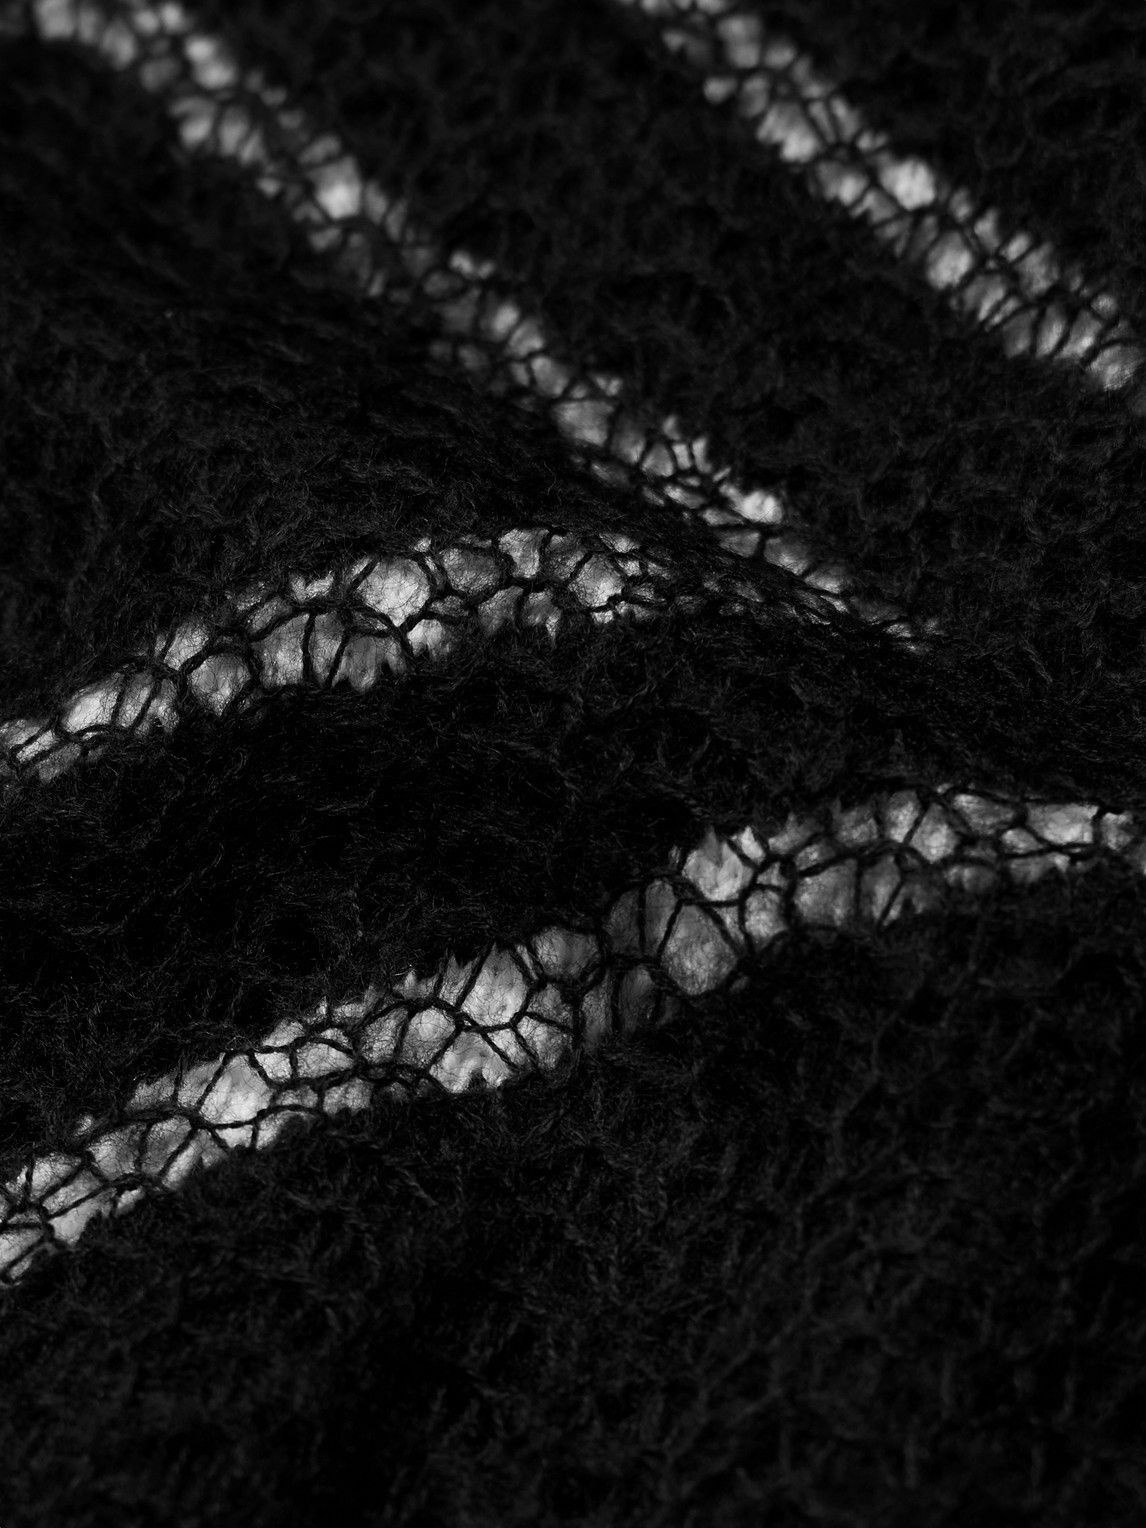 WTAPS - Layered Intarsia-Knit Sweater - Black WTAPS